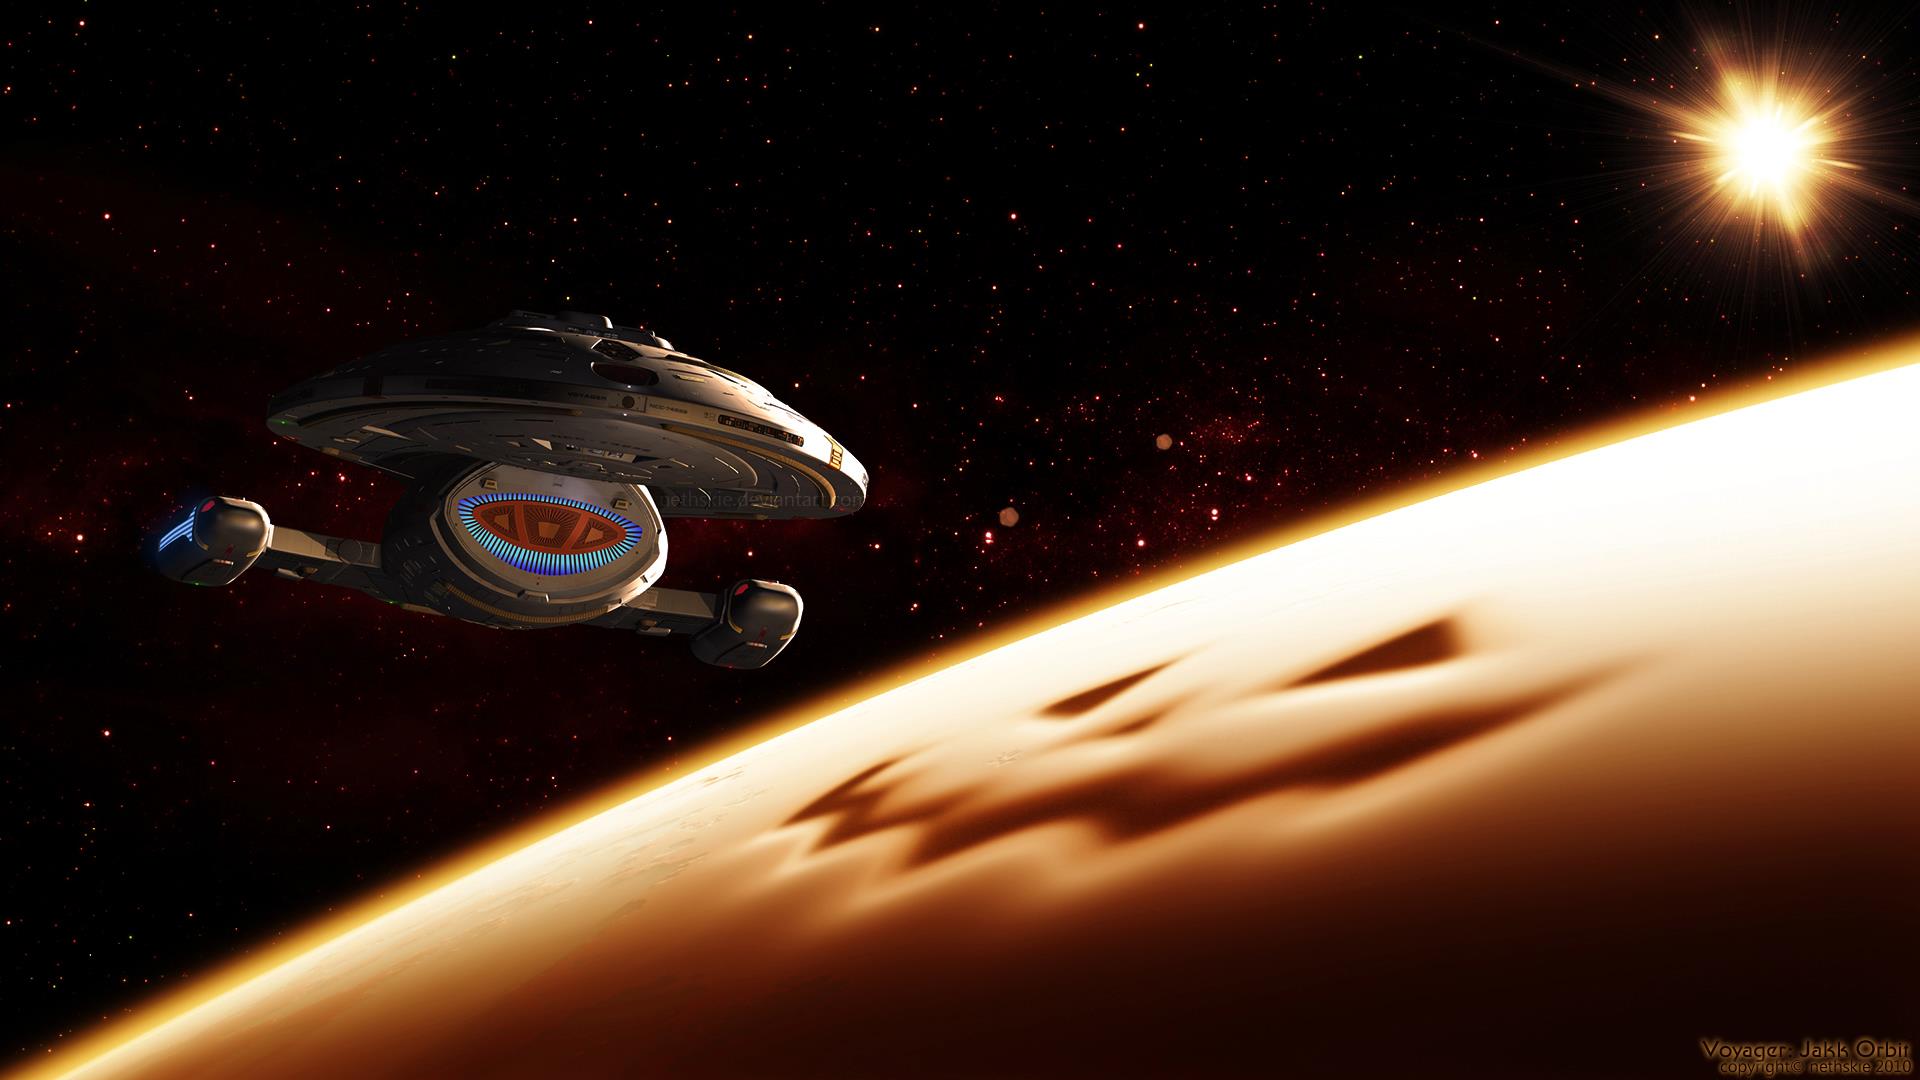 star trek fan art Star Trek: Voyager - Wild Voyager Jaki Orbit copyright nethske 2010